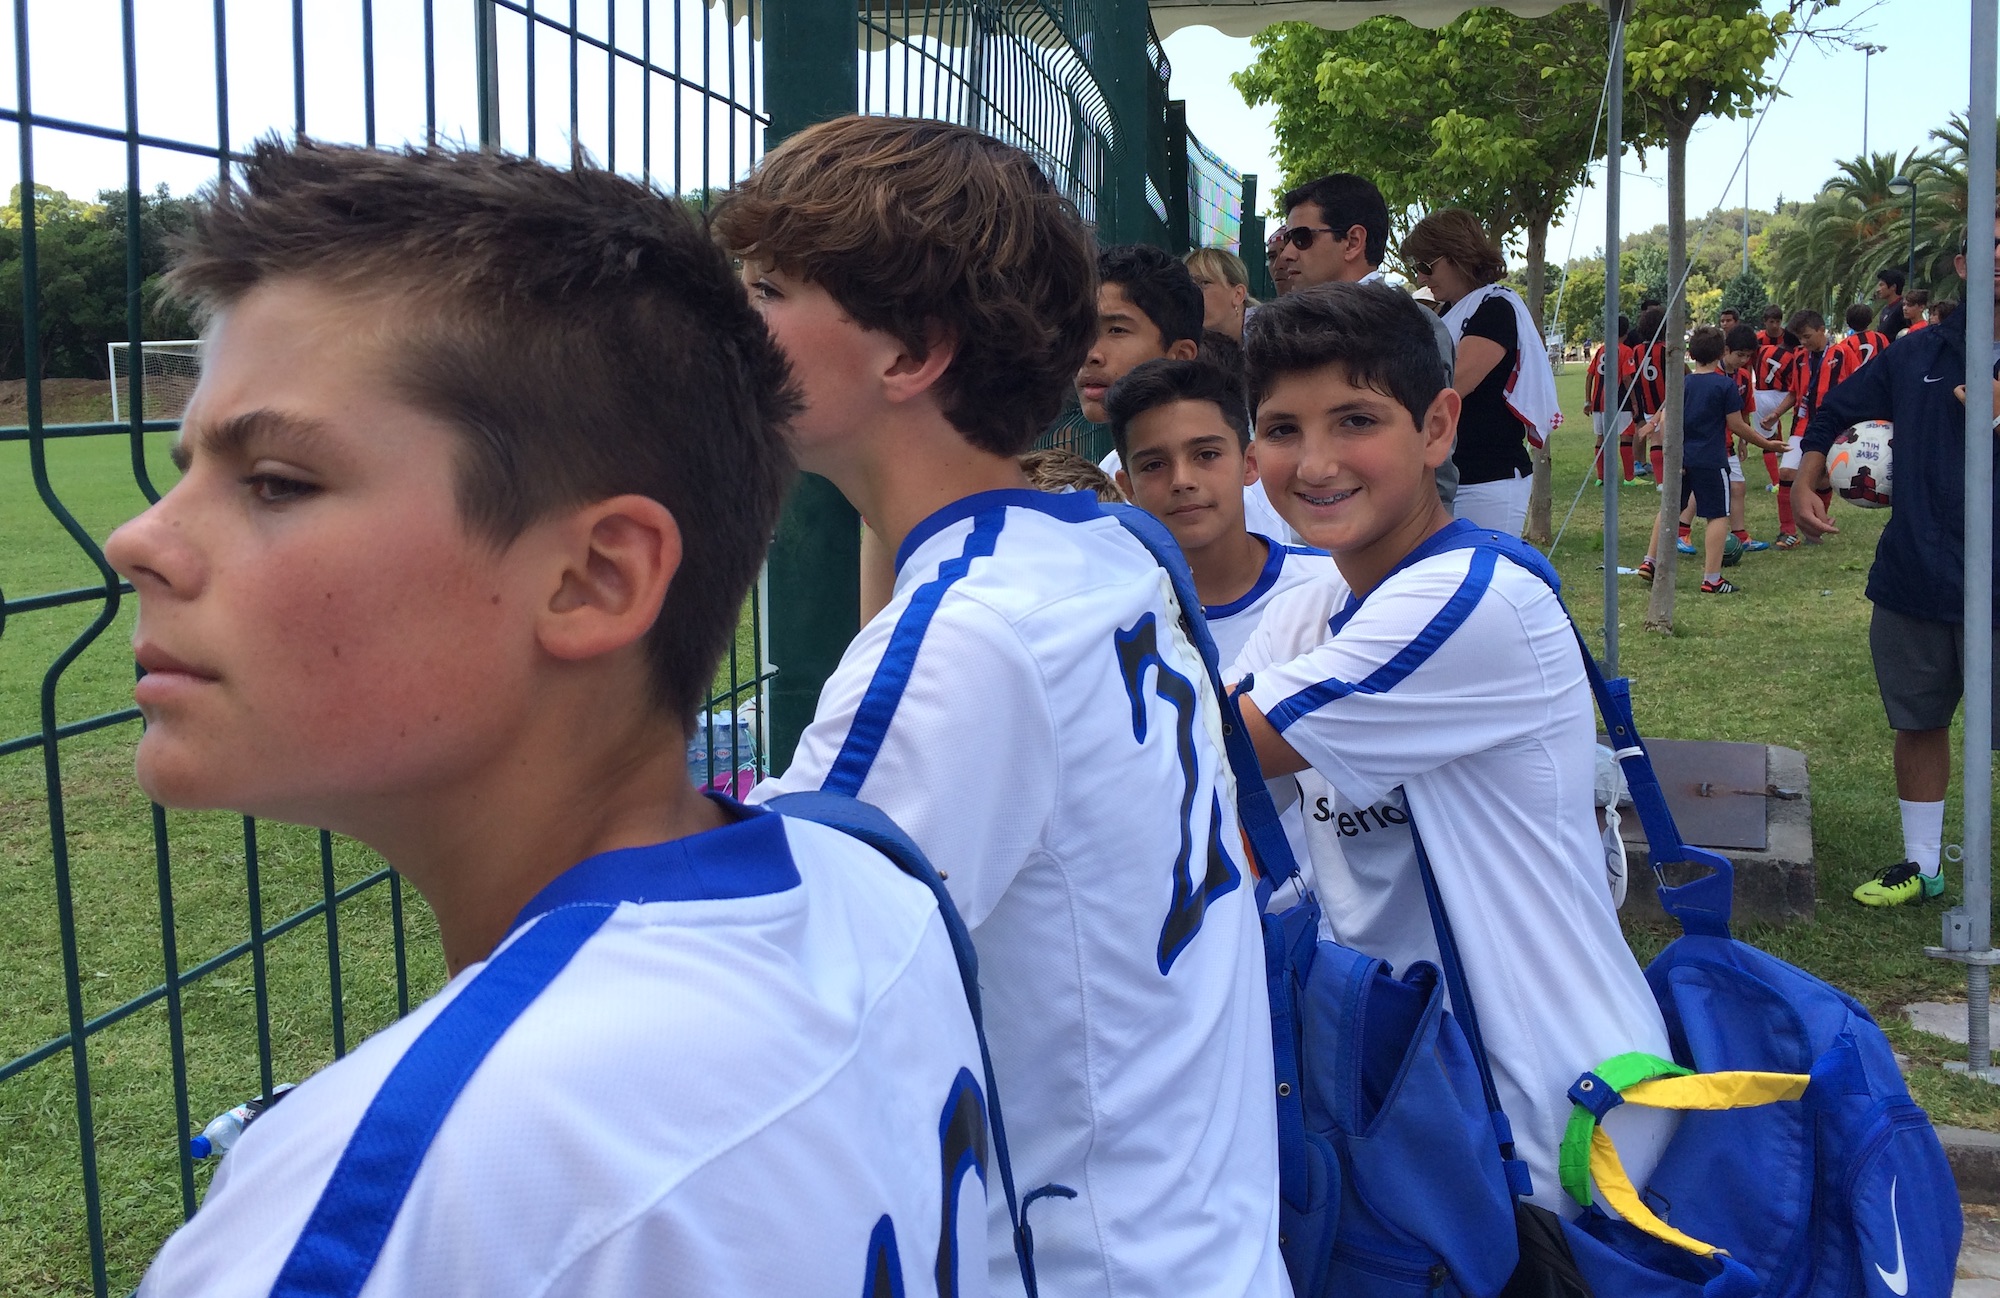 Youth Boys Soccer Team On A Premier International Tour Trip To Spain 2014 